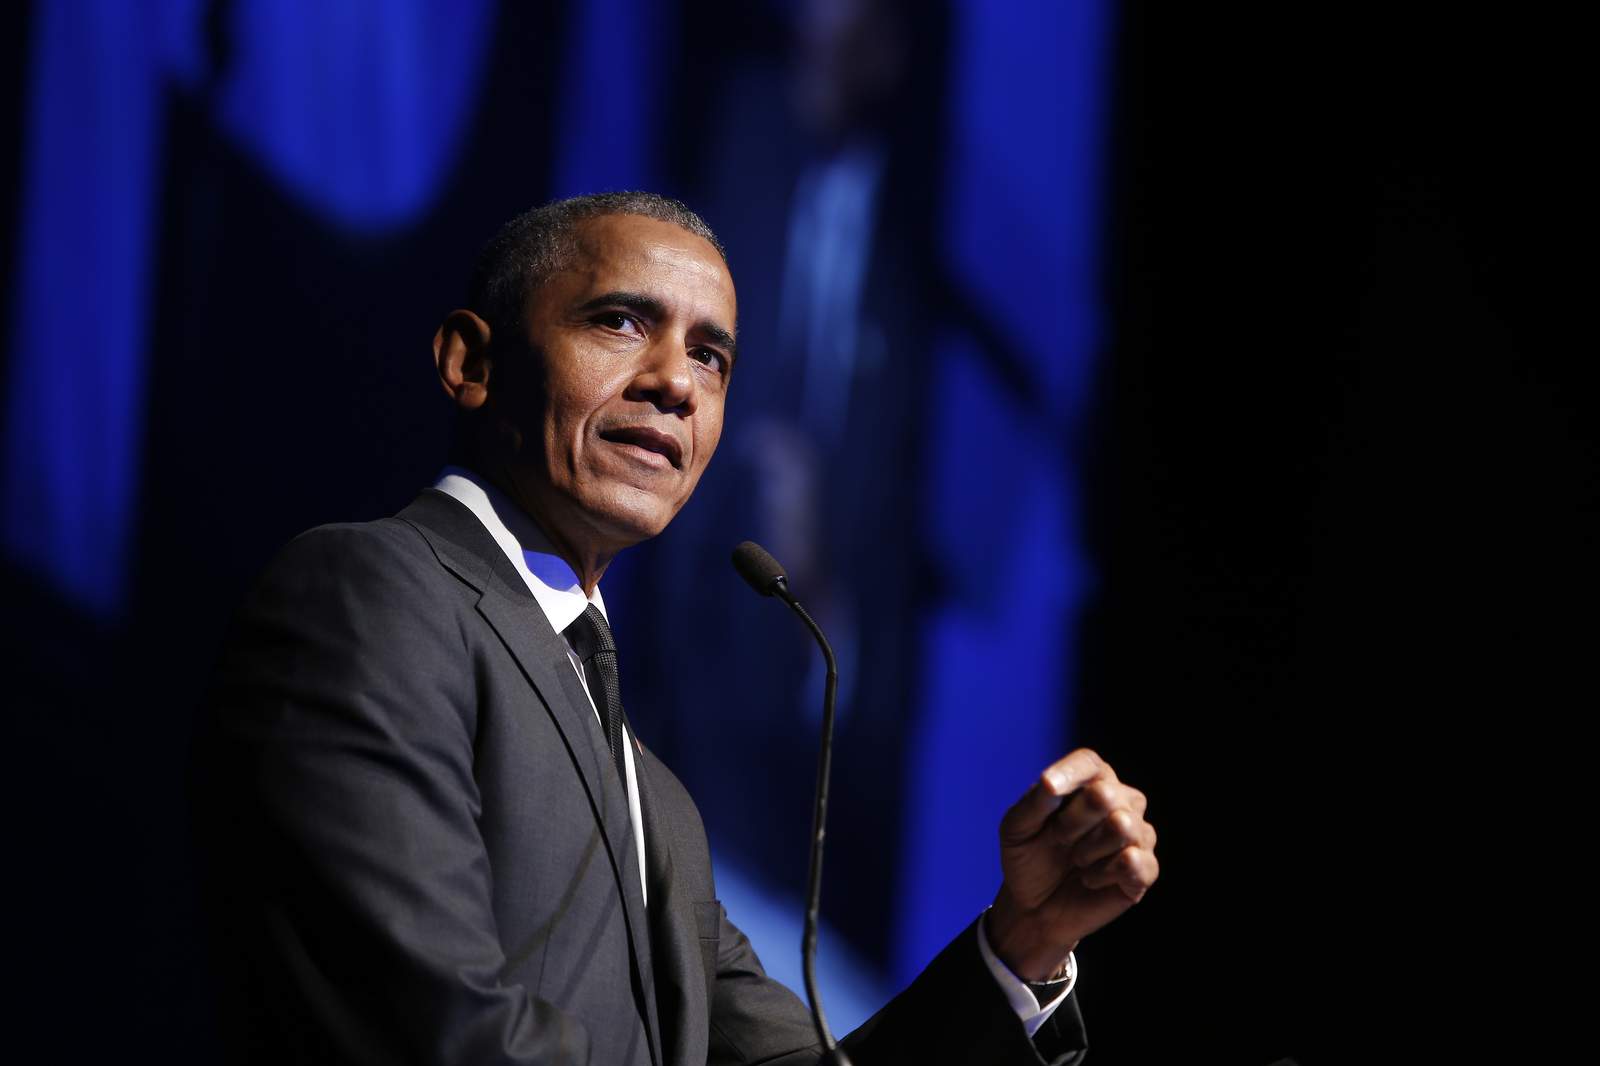 Obama criticizes virus response in online graduation speech